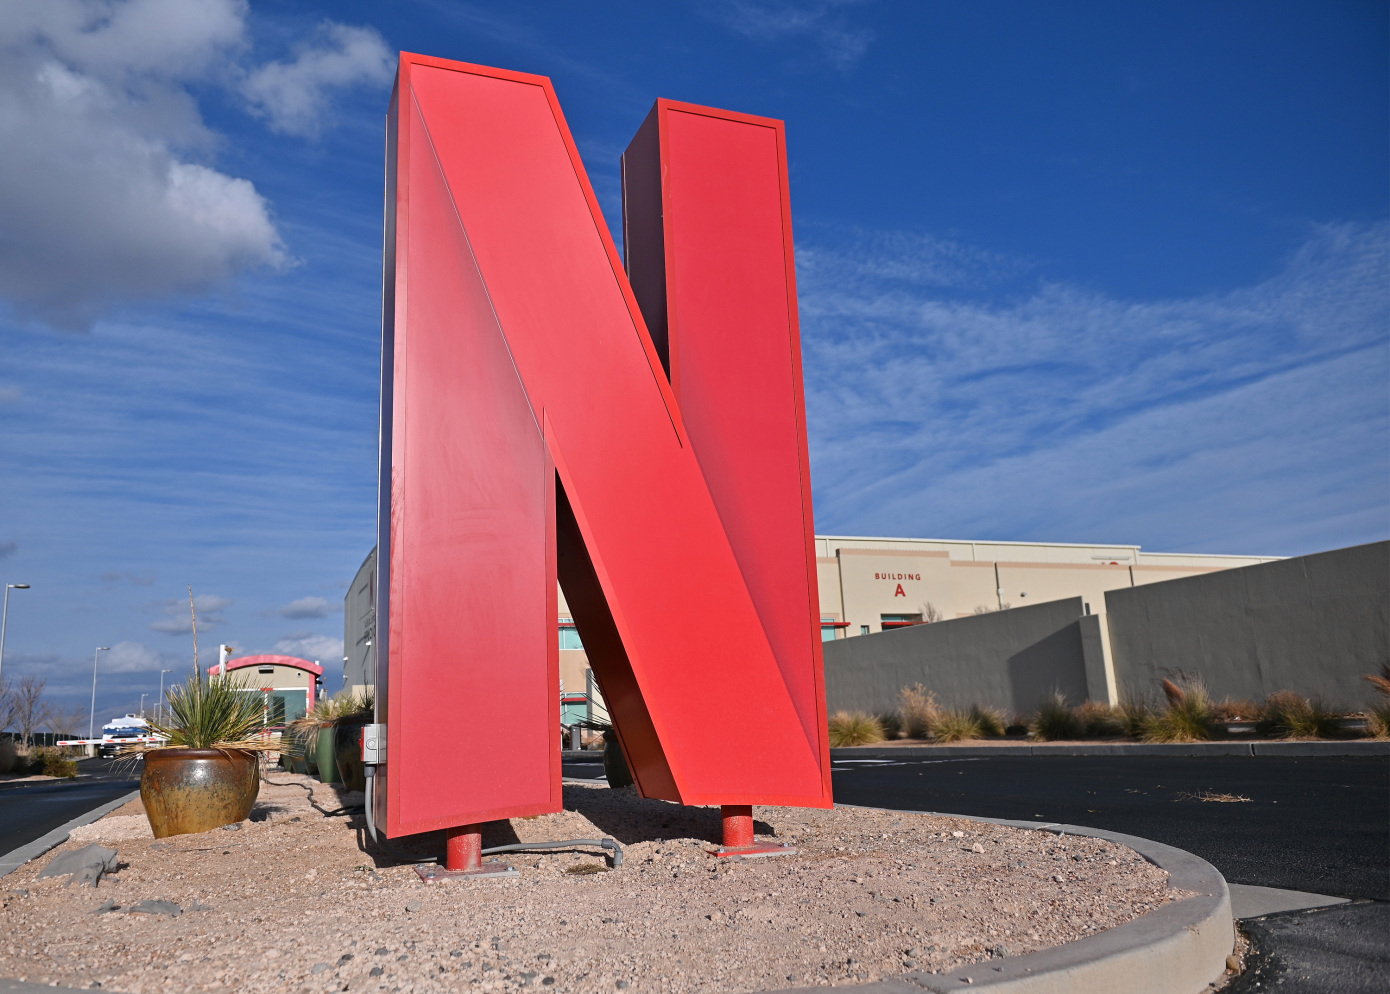 Netflix sets “Tudum”, its first global virtual fan event, for Sept. 25